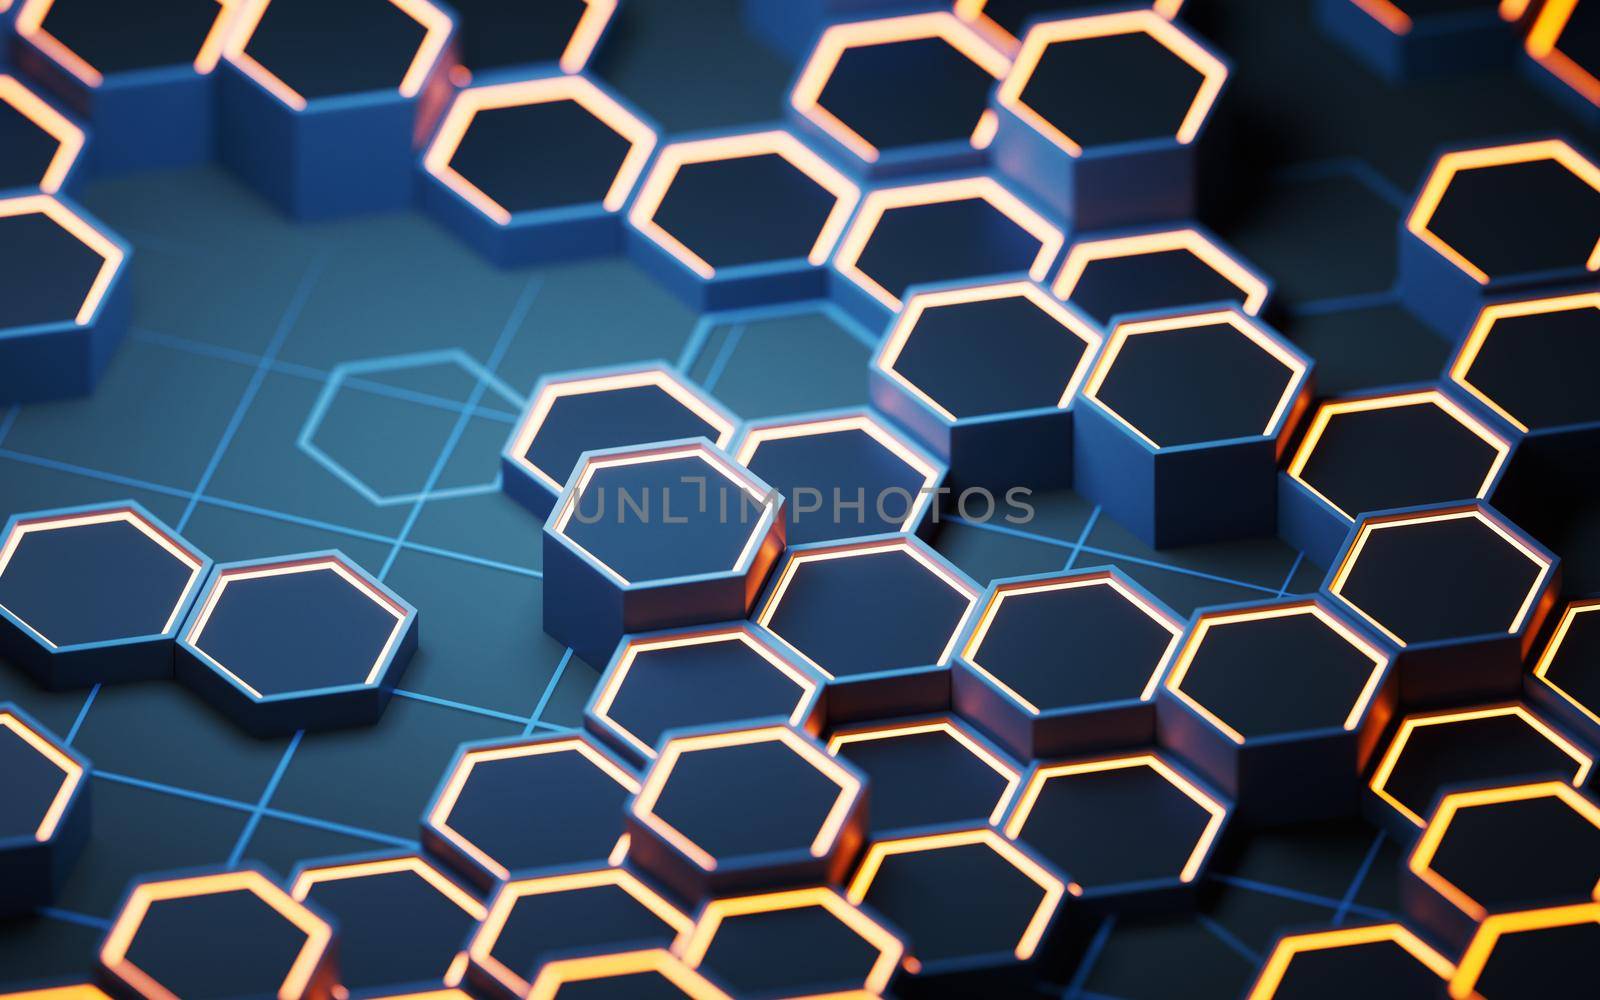 Metallic hexagon material background, 3d rendering. by vinkfan